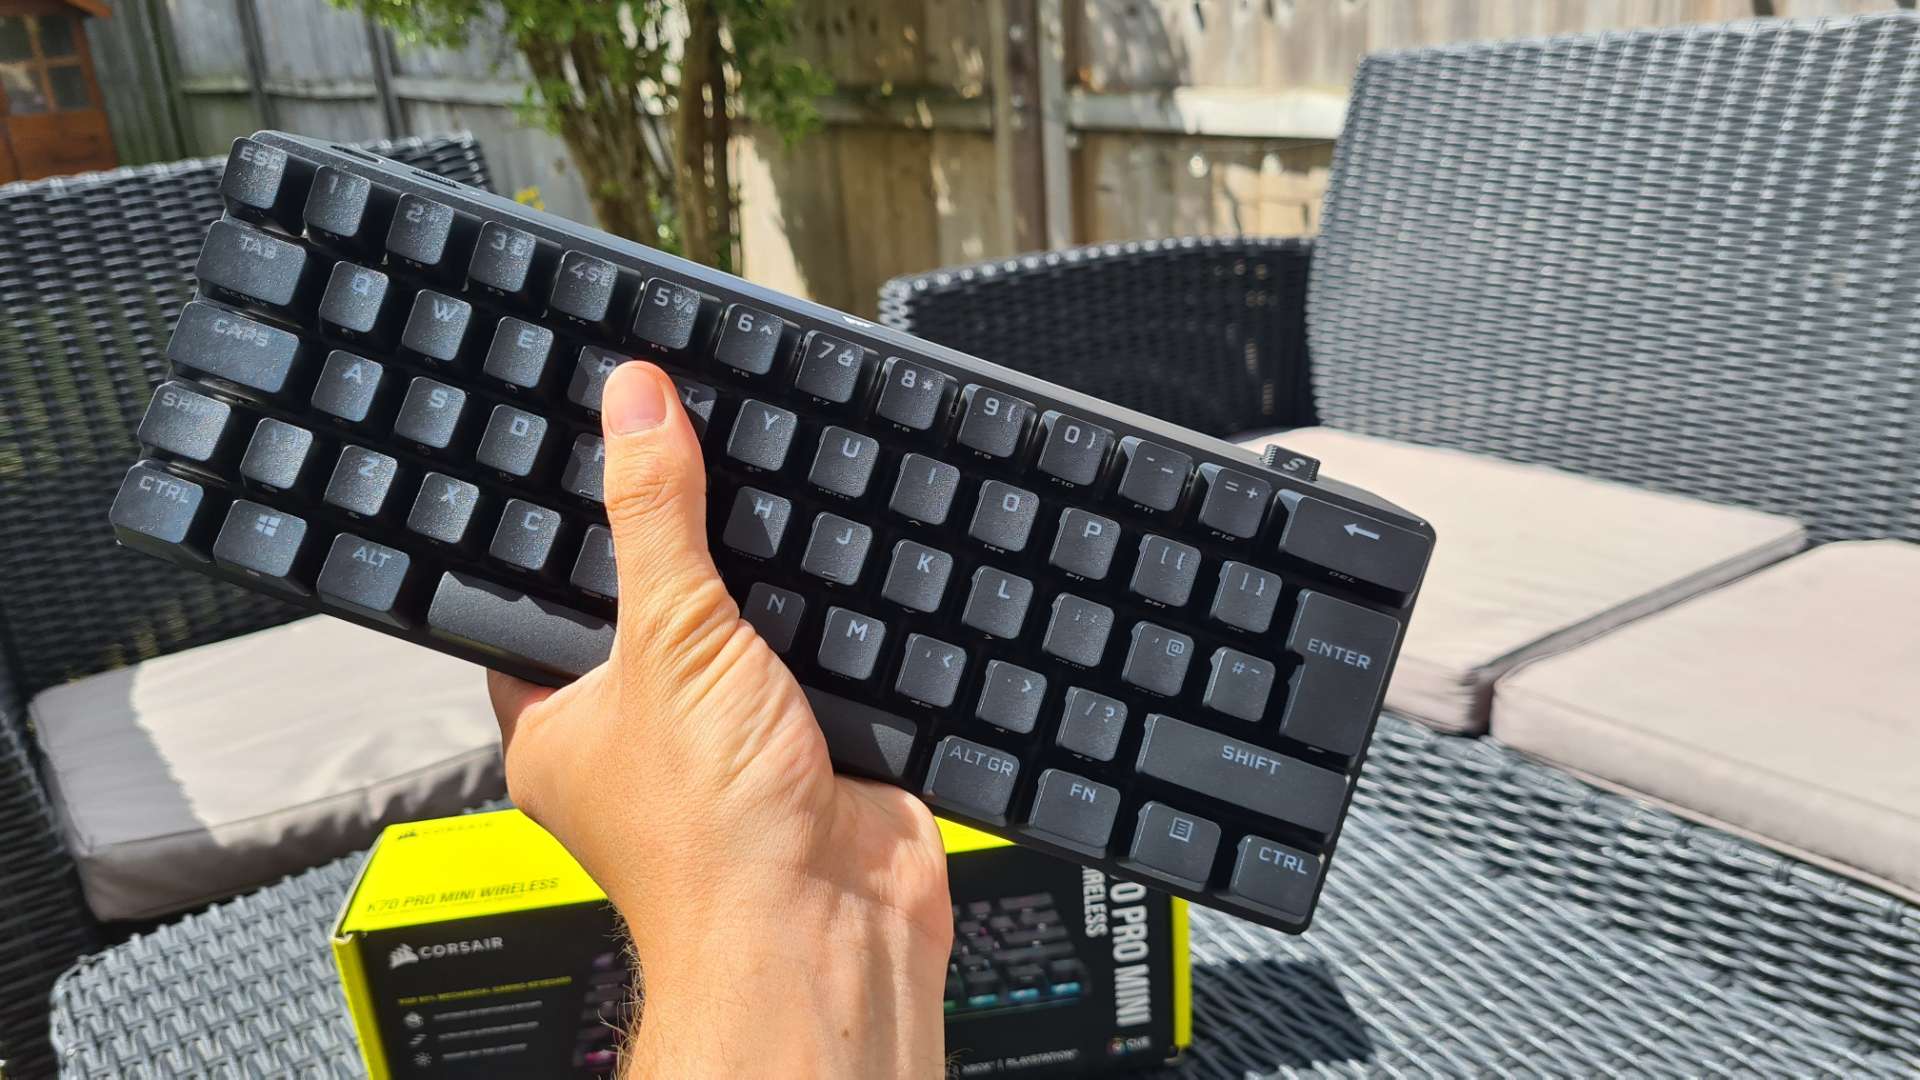 Corsair K70 Pro Mini Wireless Keyboard Review | eTeknix